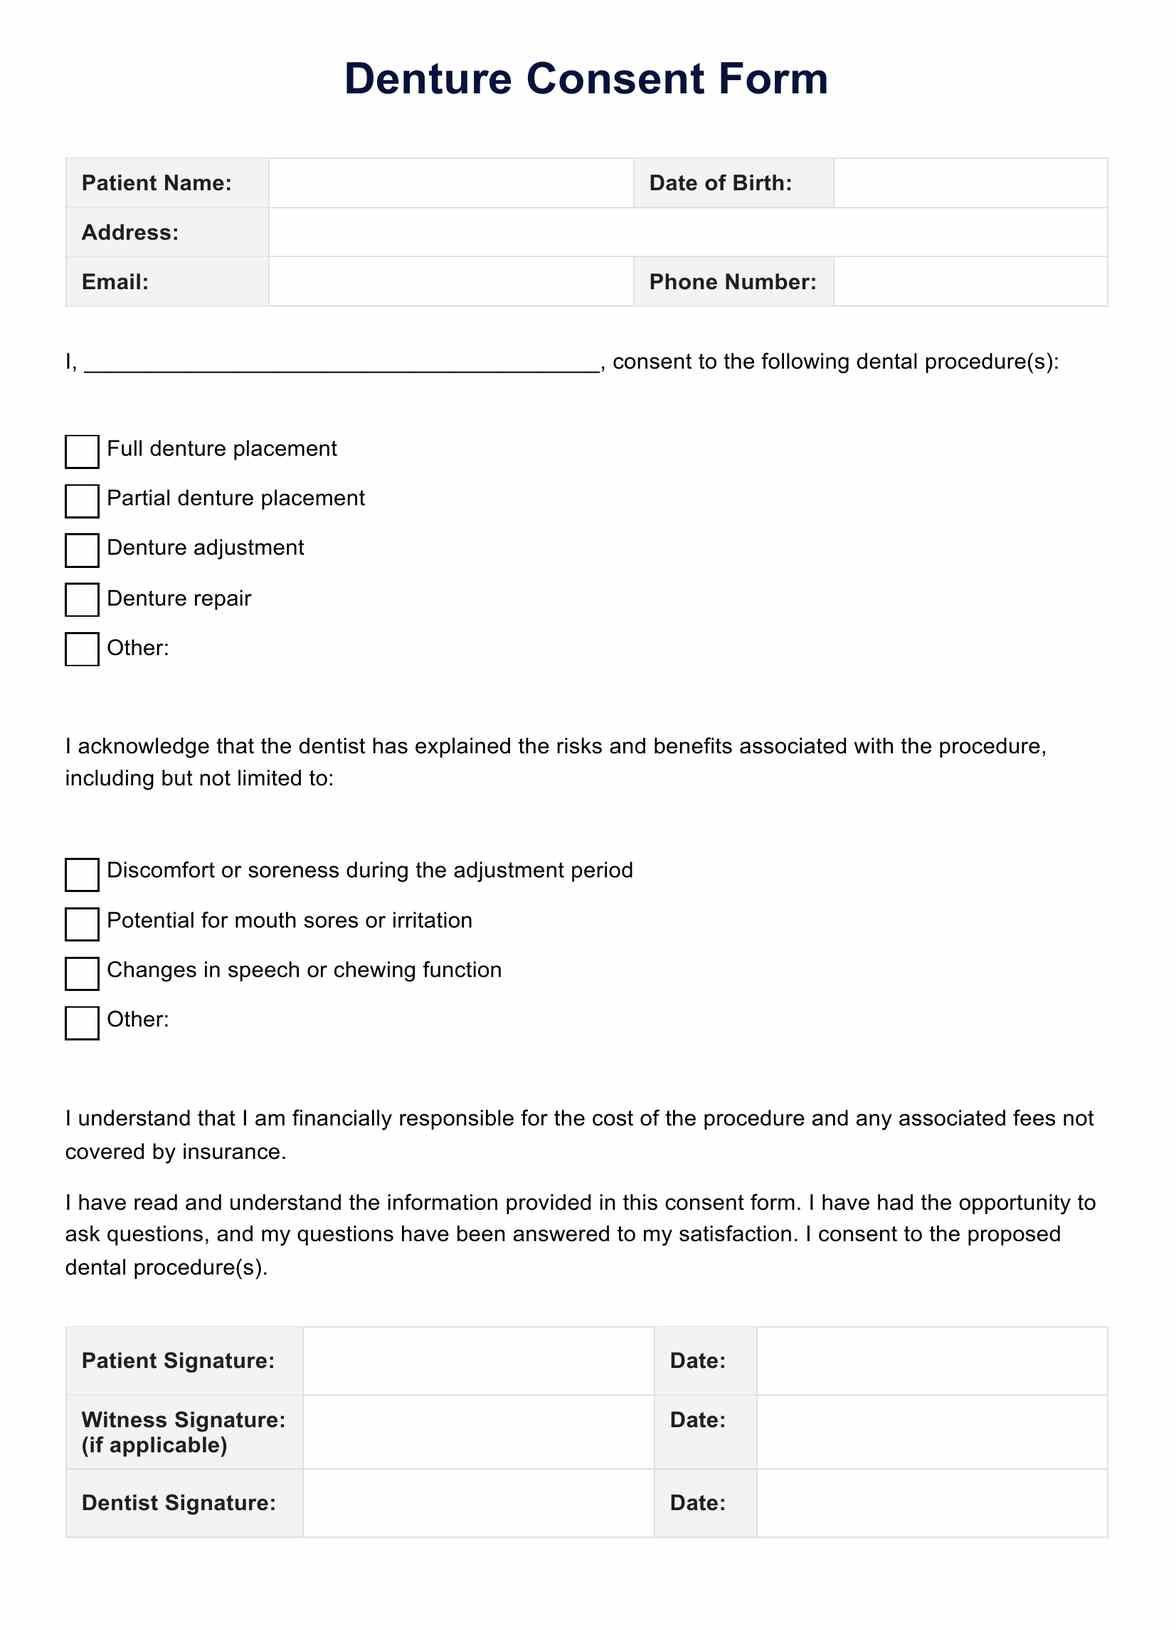 Denture Consent Form PDF Example